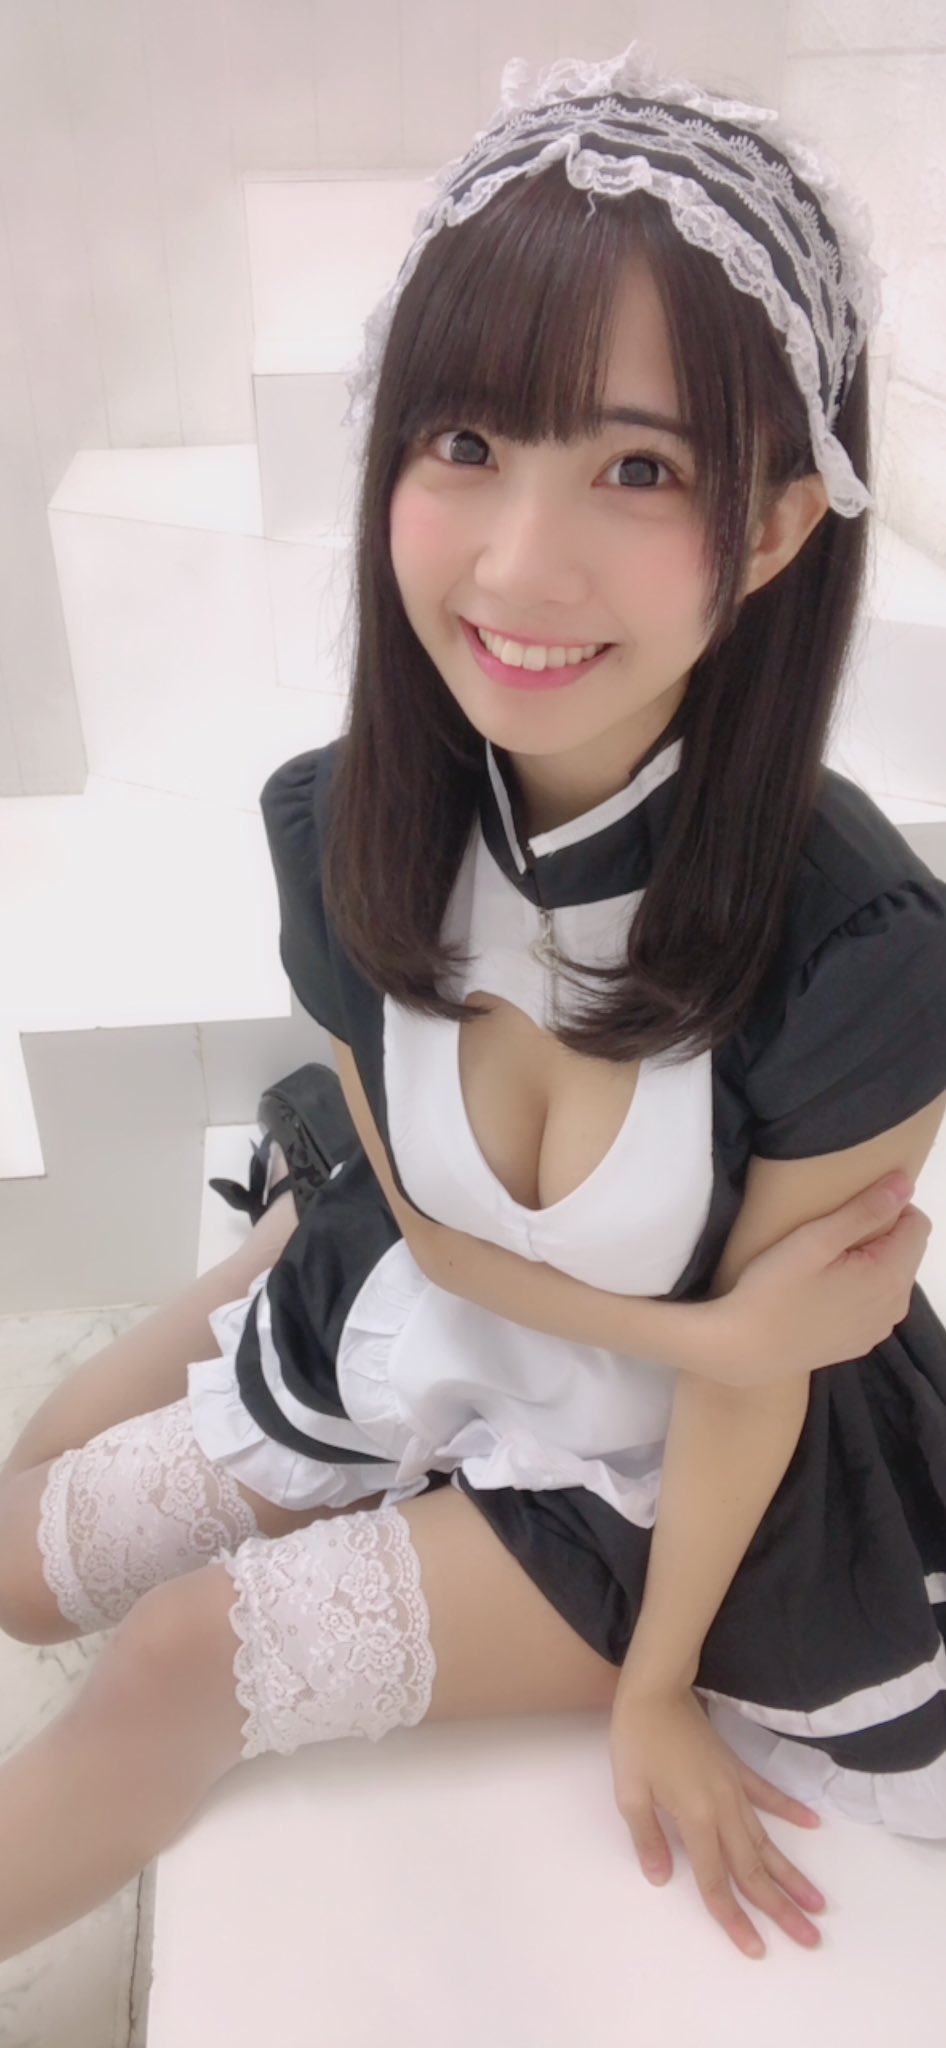 amau kisumi cute japanese idol petite maid girl breasts tits